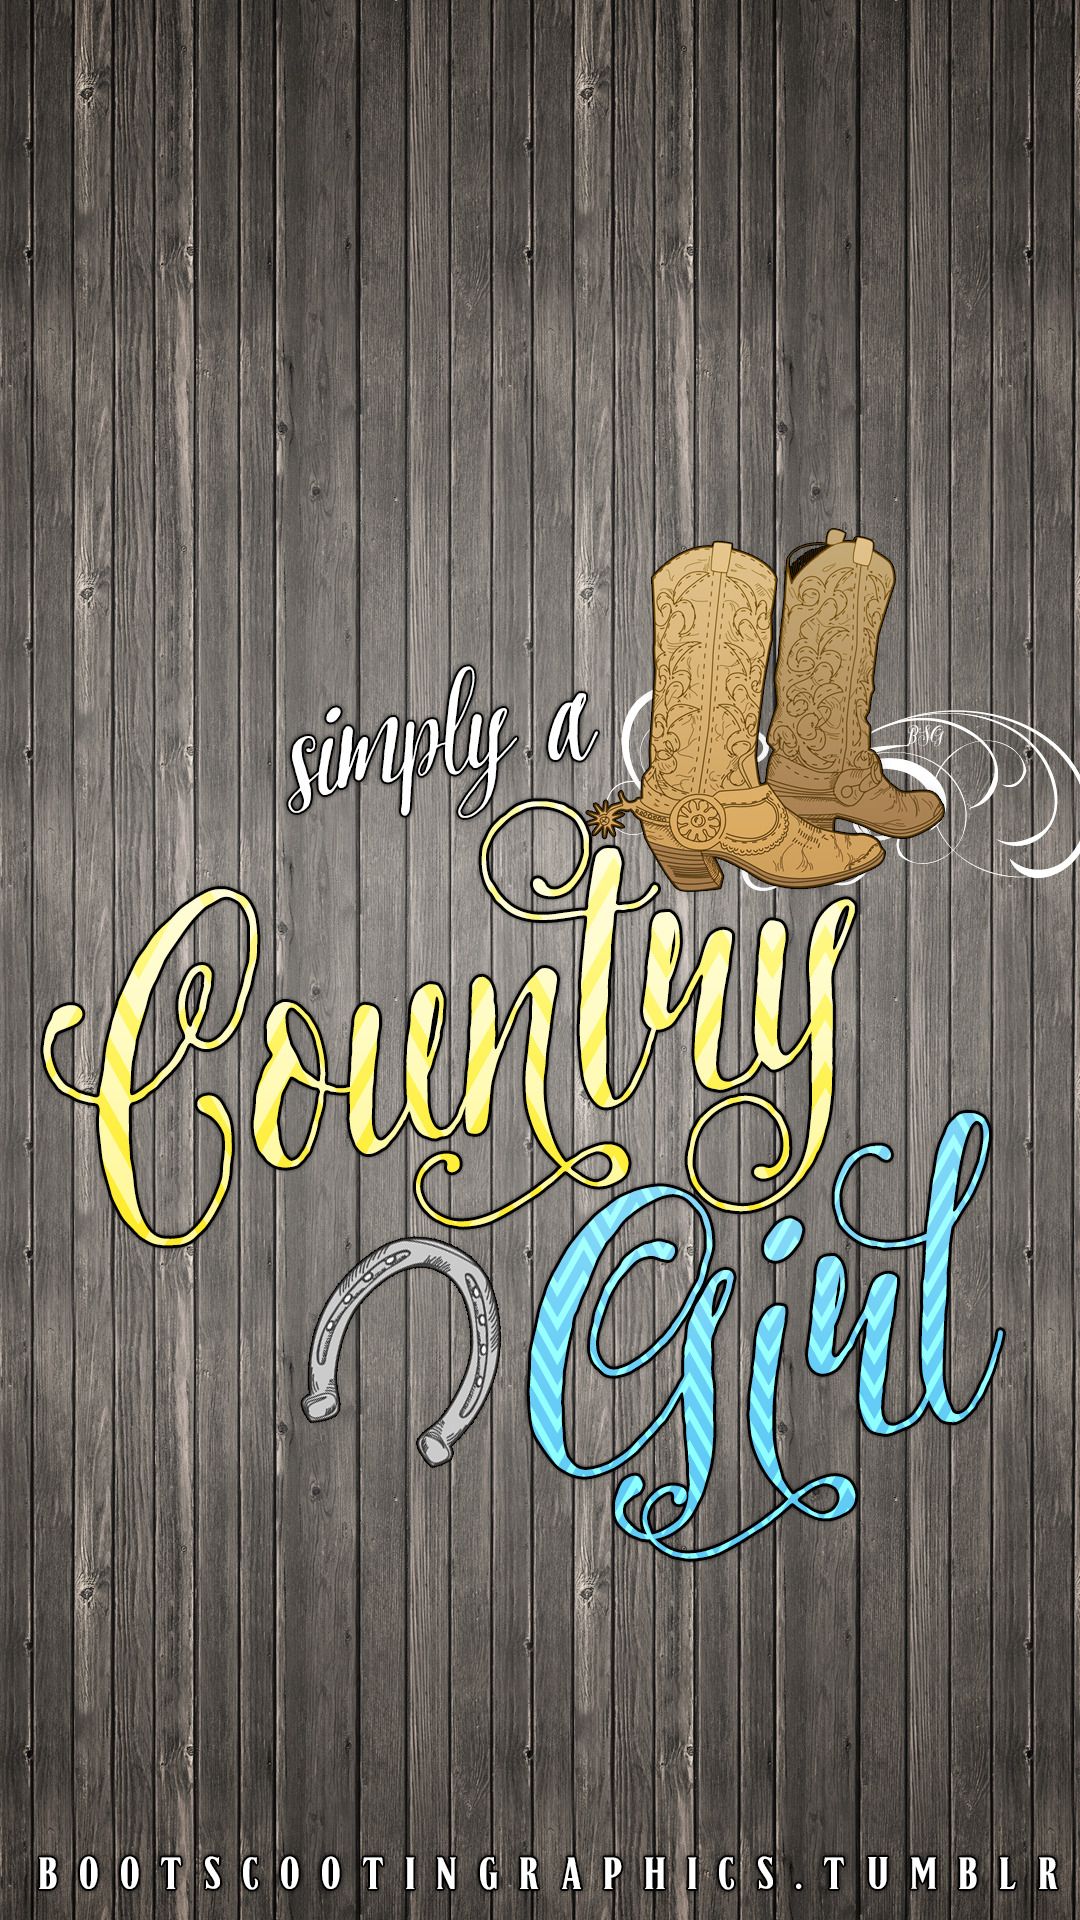 Country Girls Wallpaper ideas. country girls, camo wallpaper, girl wallpaper